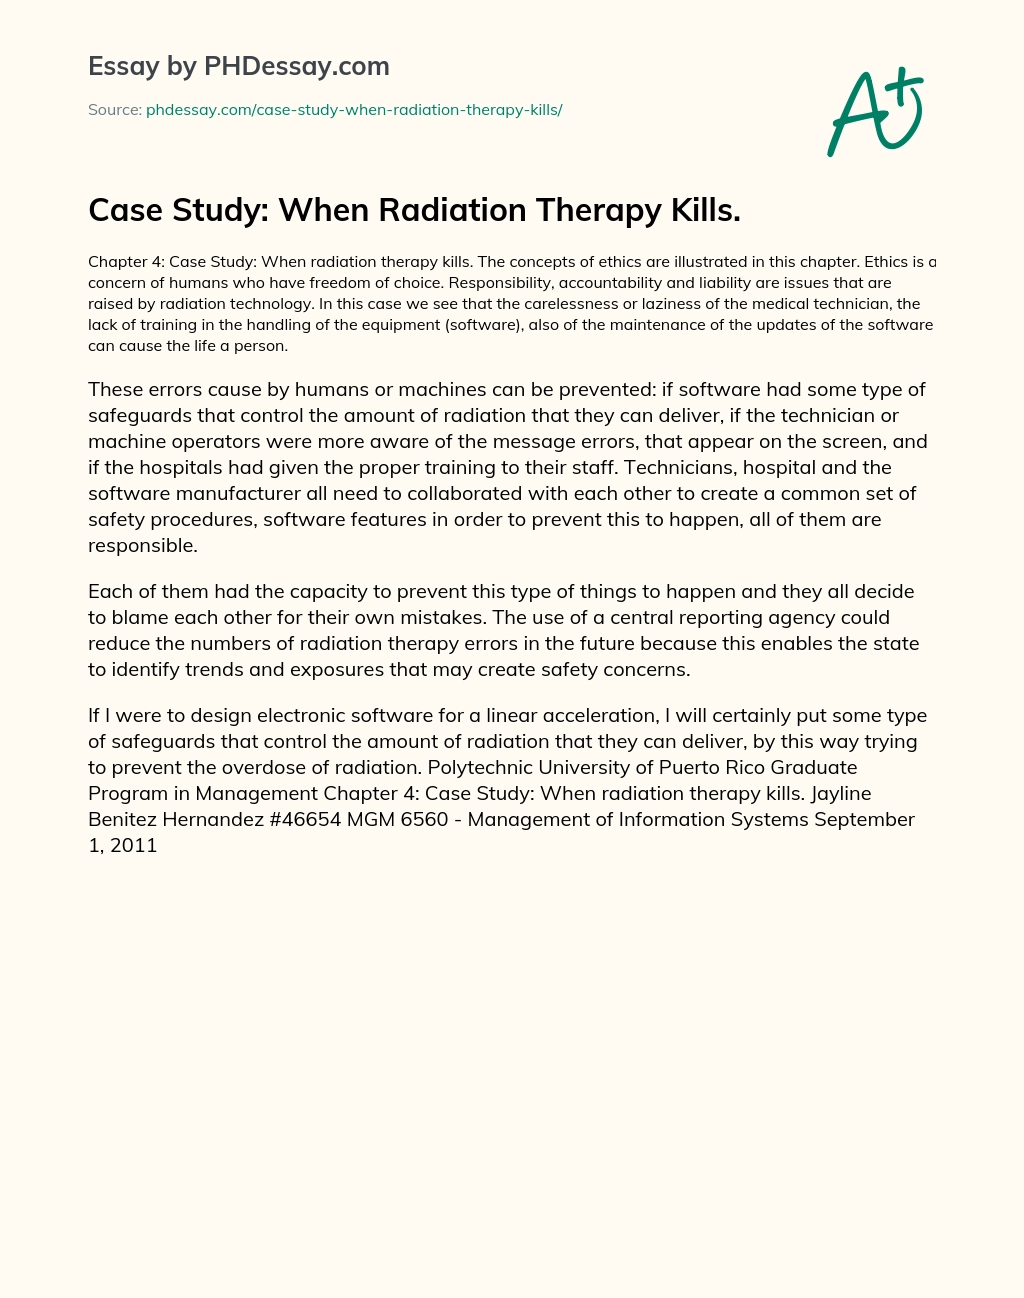 Case Study: When Radiation Therapy Kills. essay